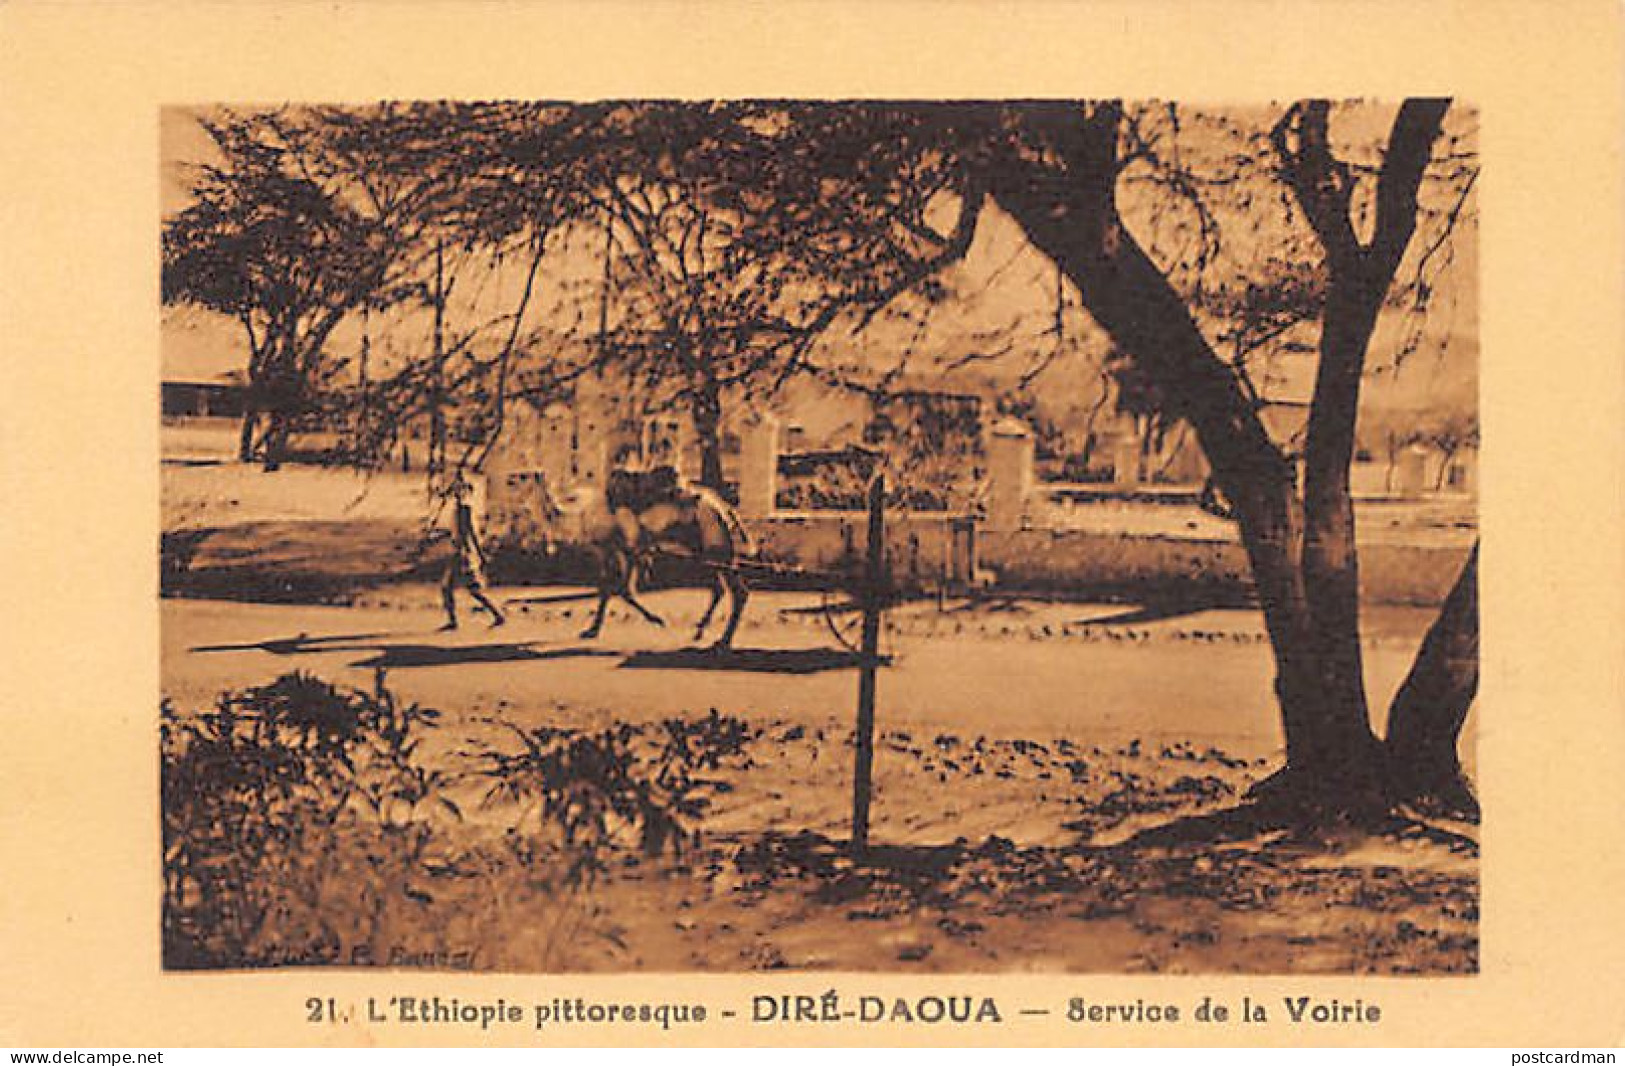 Ethiopia - DIRE DAWA - Roads Department - Publ. Printing Works Of The Dire Dawa Catholic Mission - Photographer P. Baudr - Ethiopia